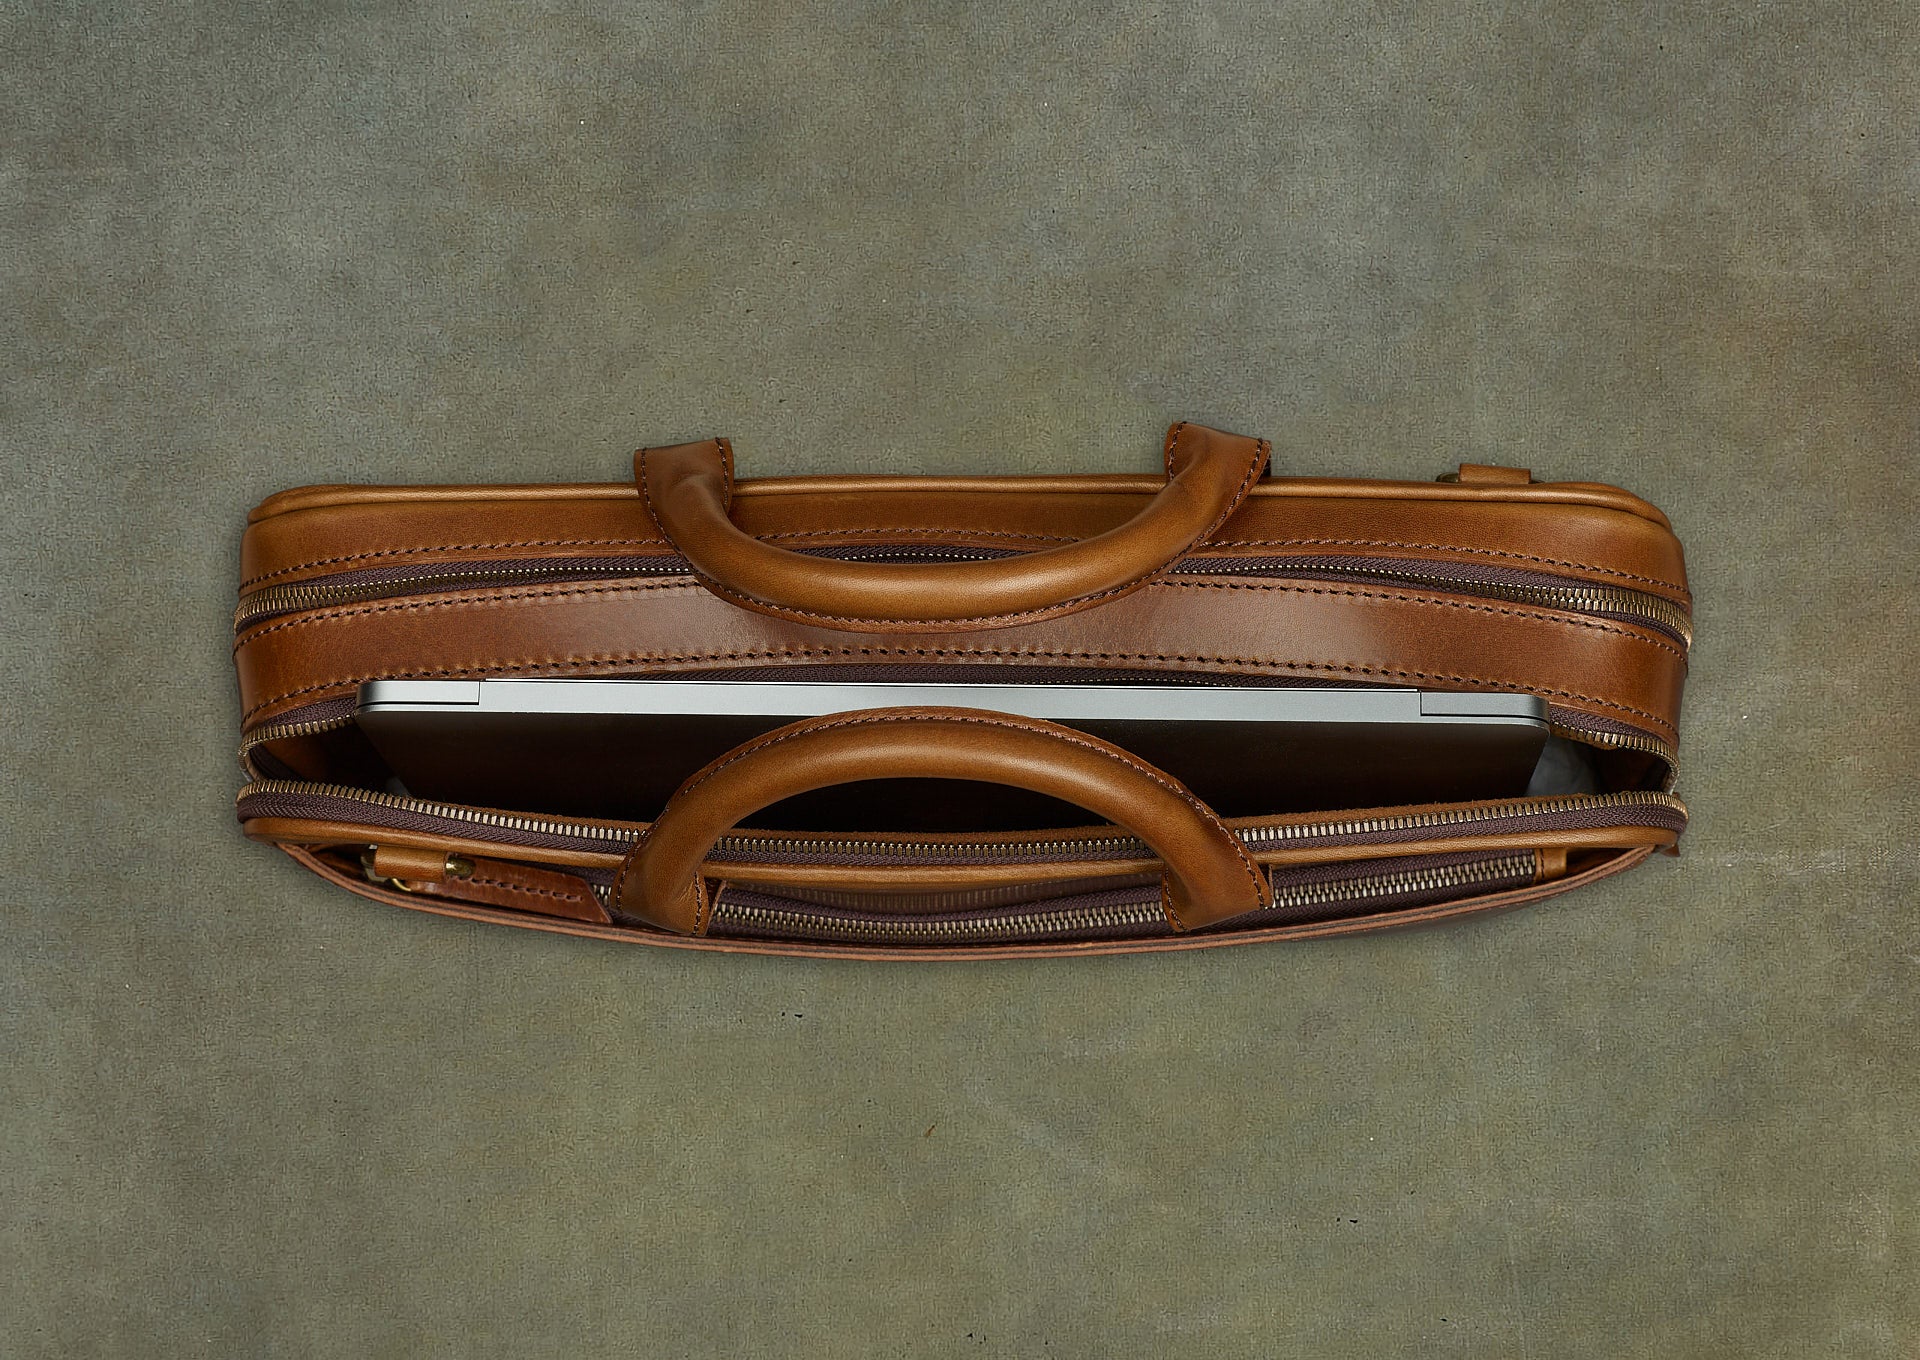 Leather portfolio - Men's Brown Leather Portfolio from Satchel & Page